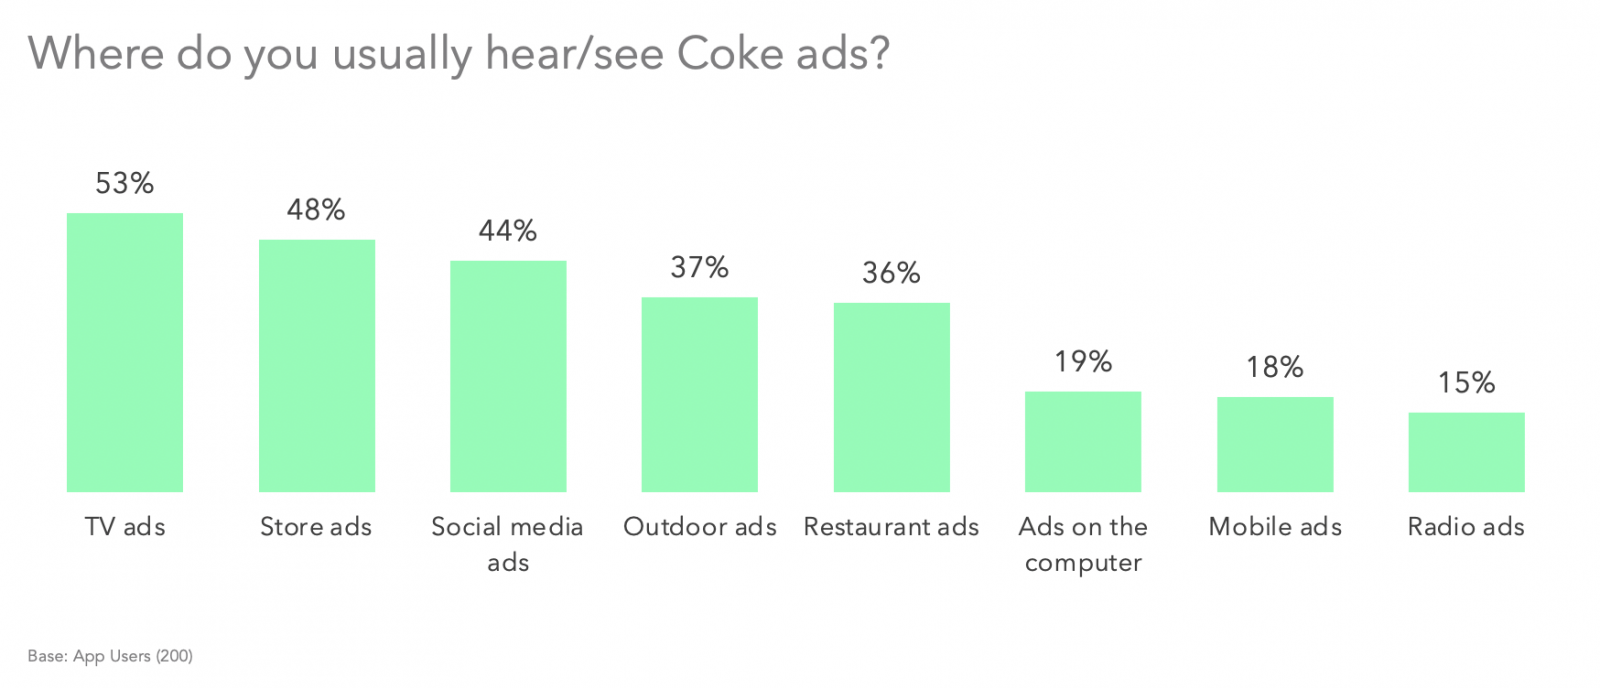 Where do you usually hear/see Coke ads?